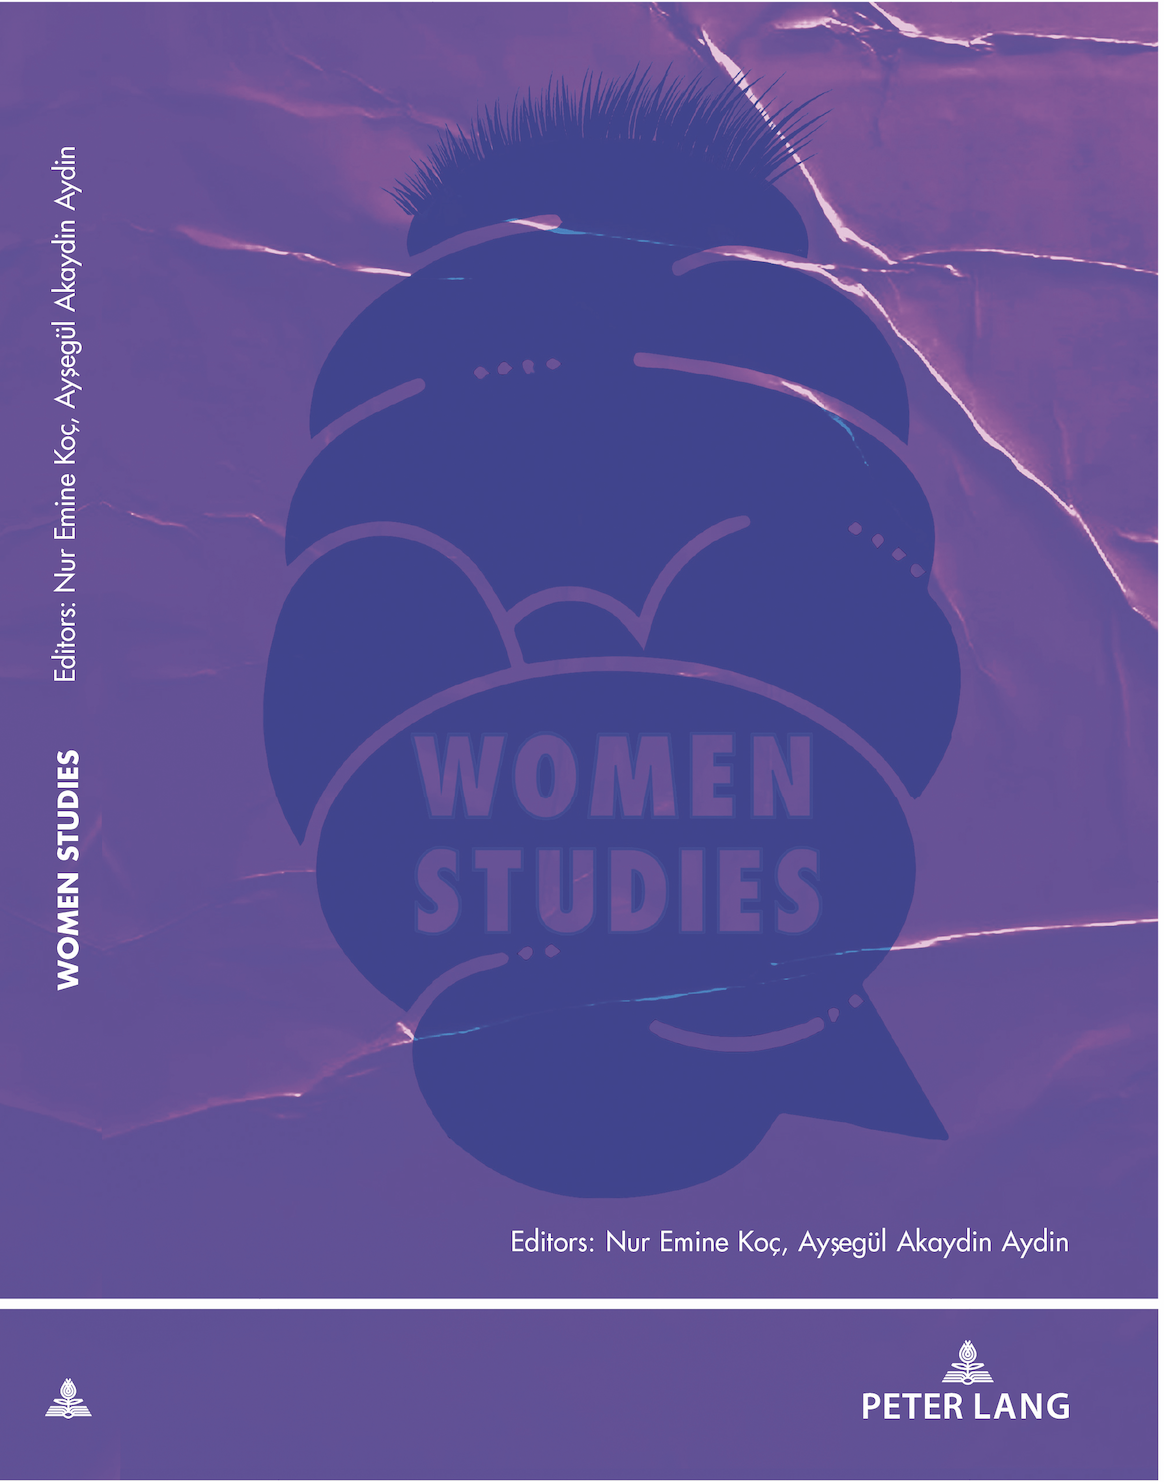 women studies.png